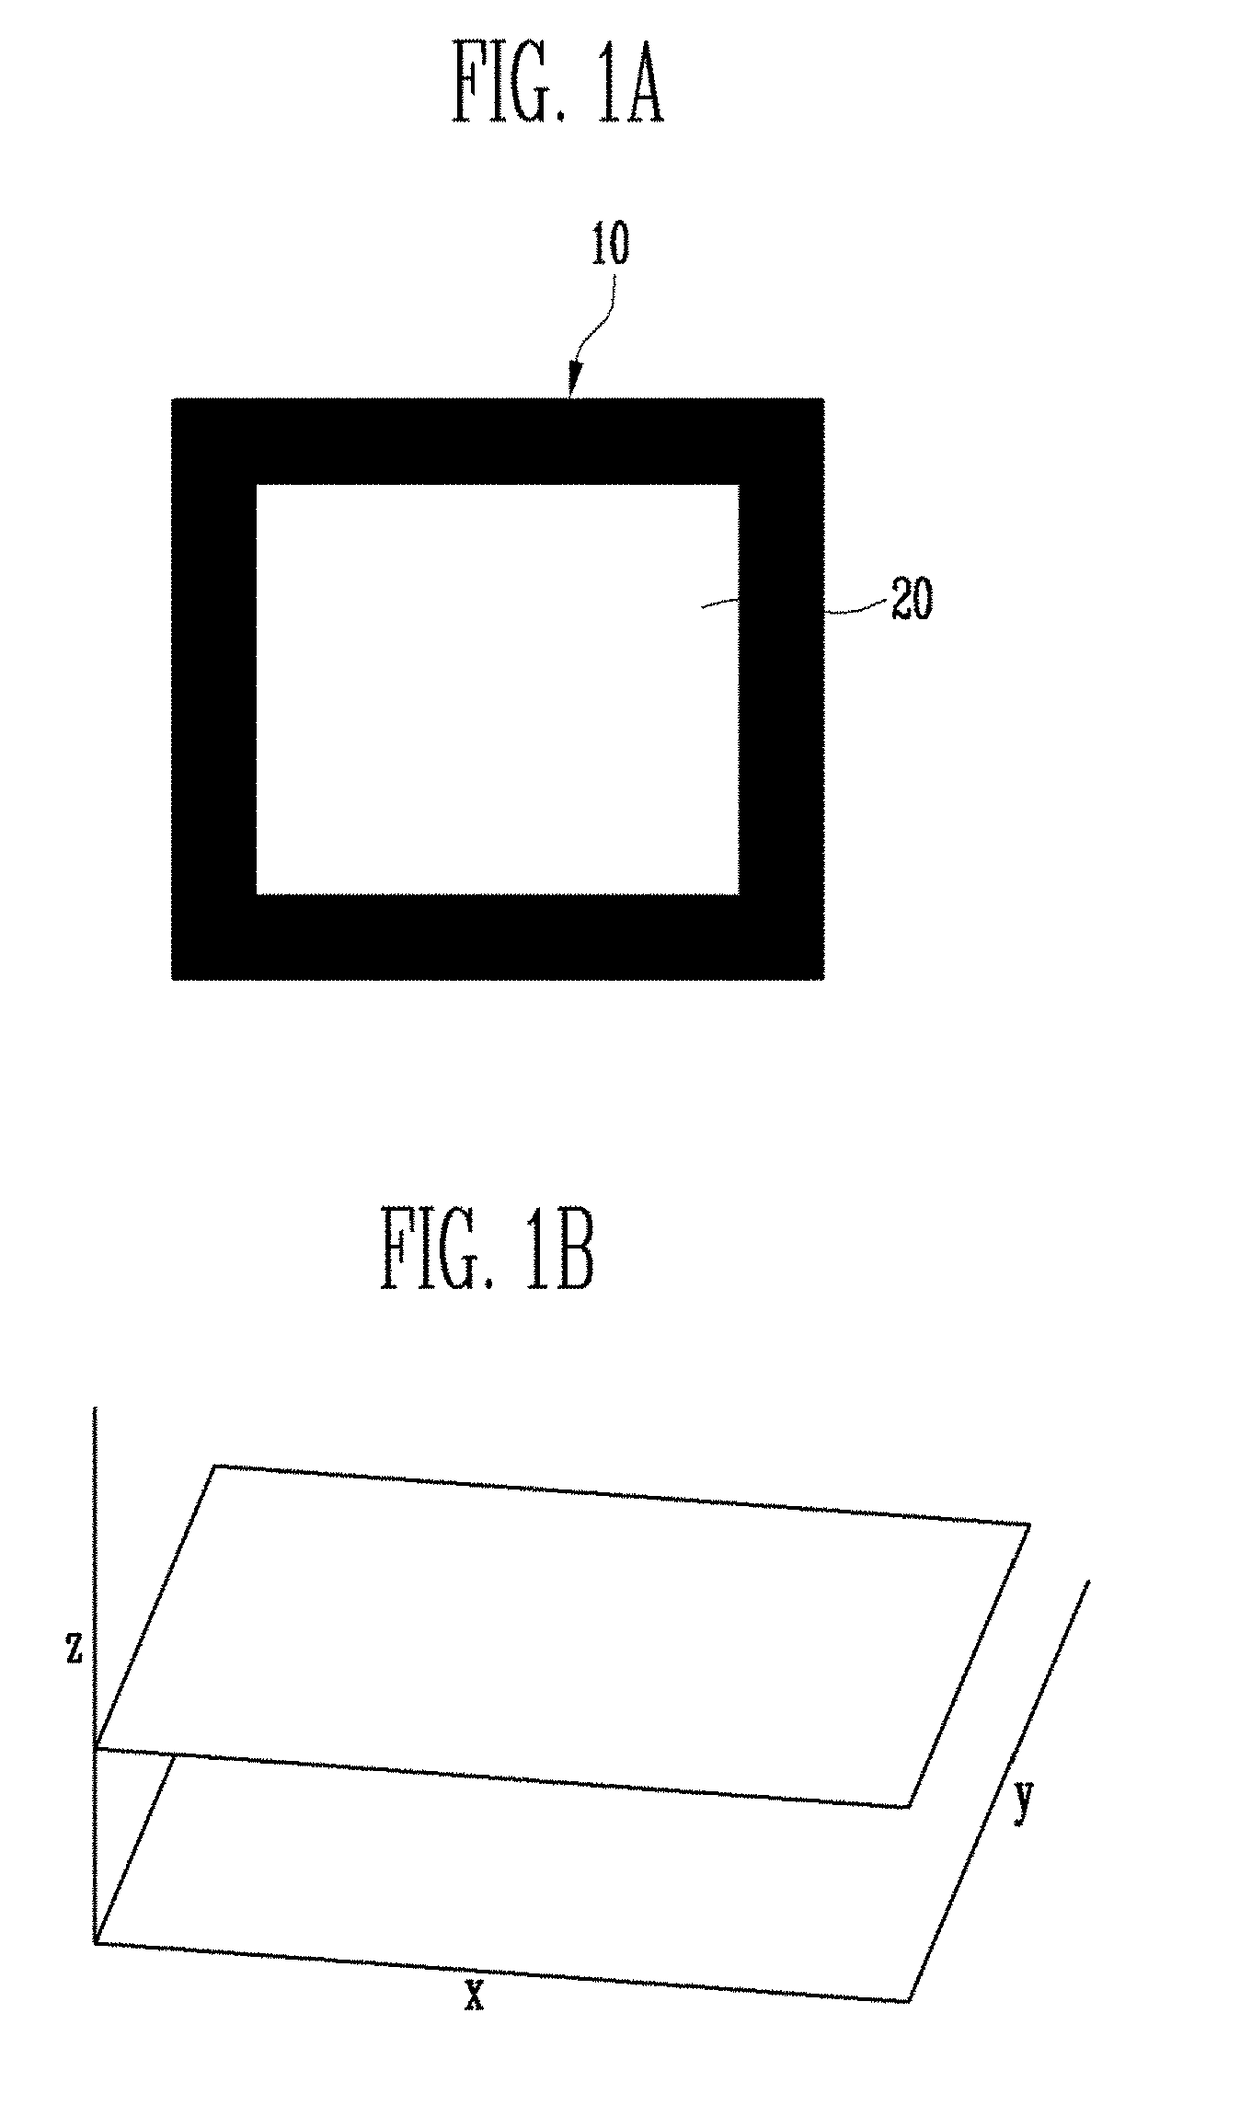 Display device and method for displaying an image thereon